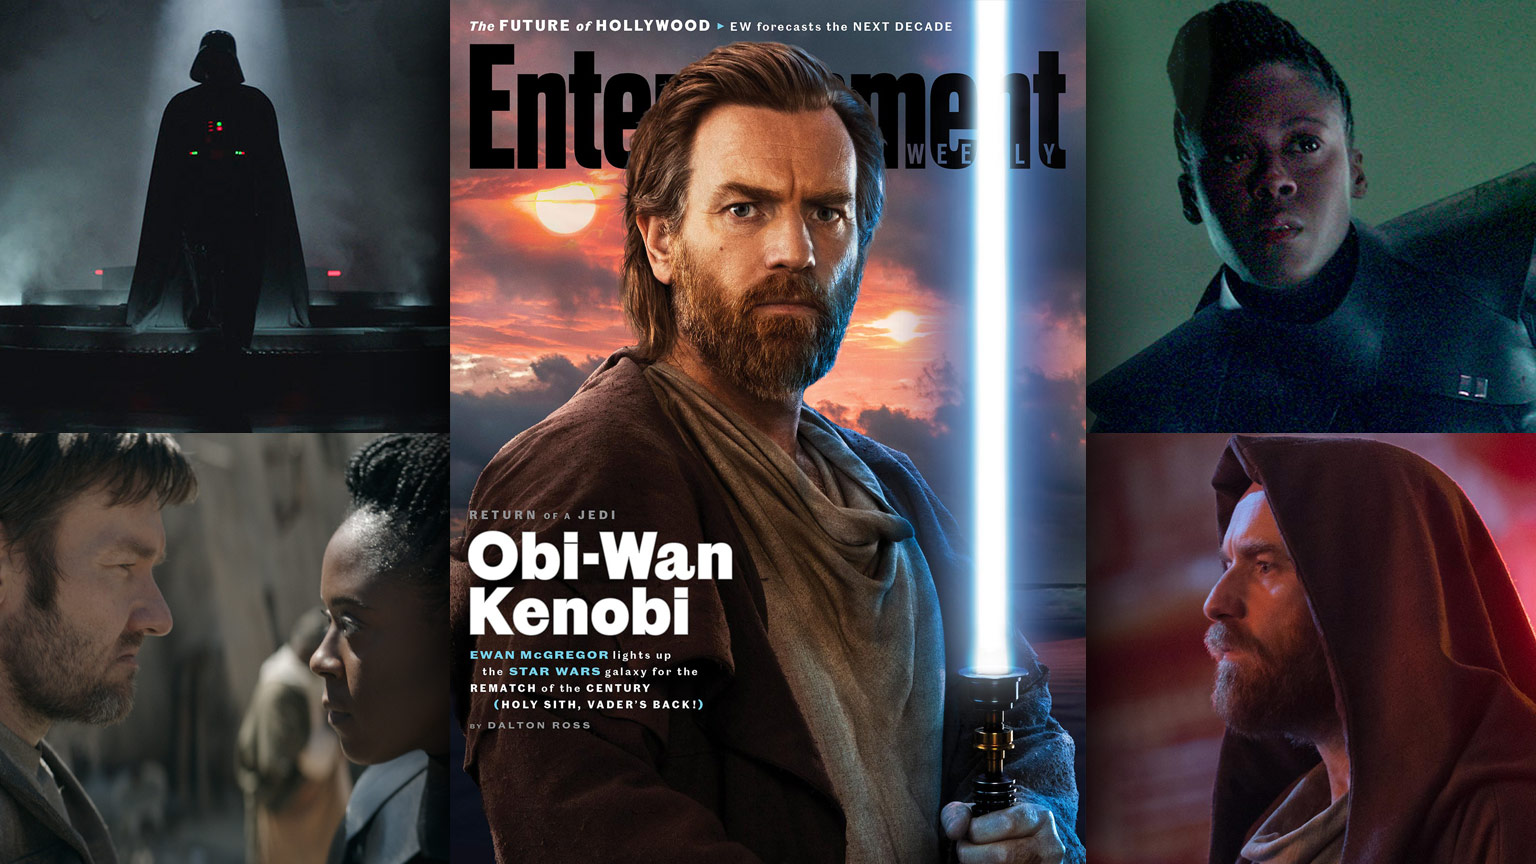 Obi Wan Kenobi Photo And Details Revealed